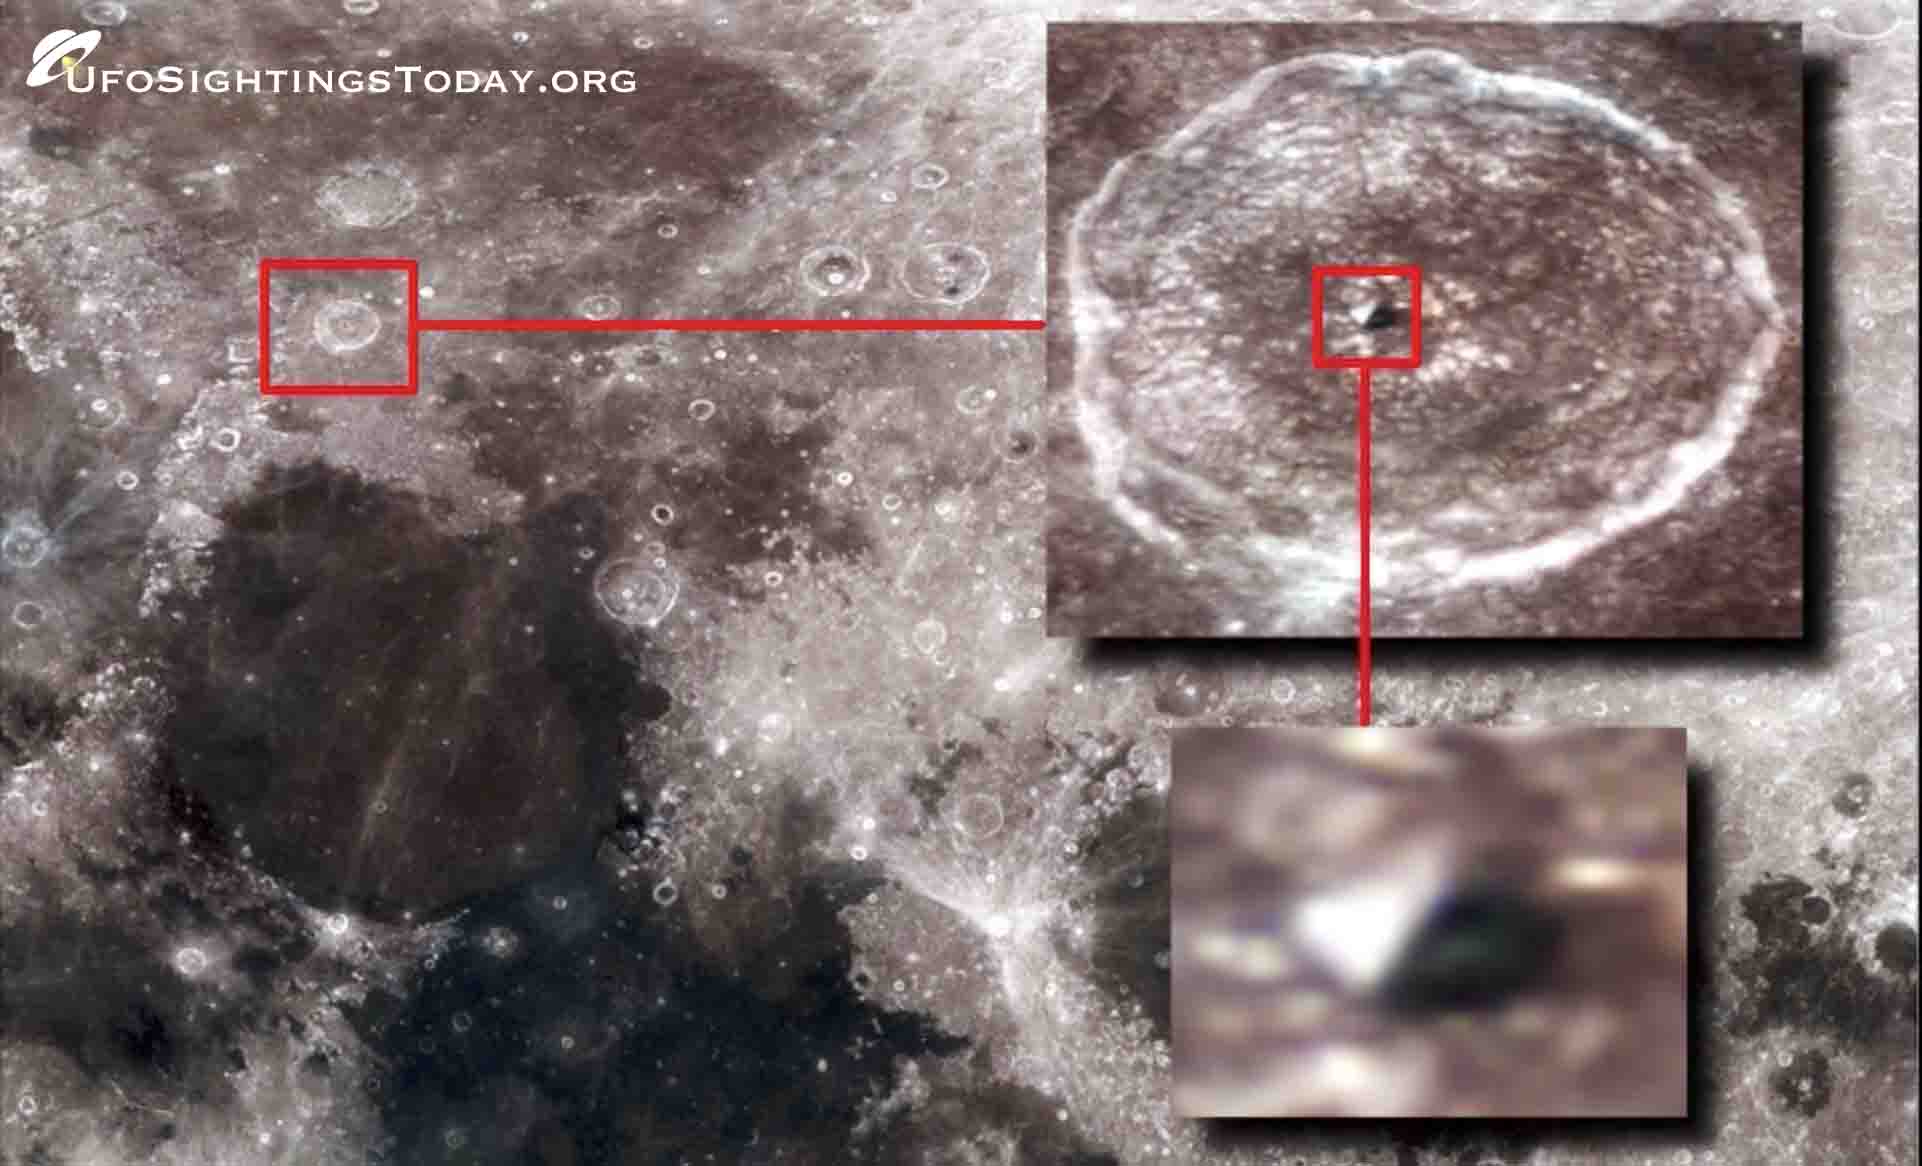 ancient pyramid has benn found on the moon